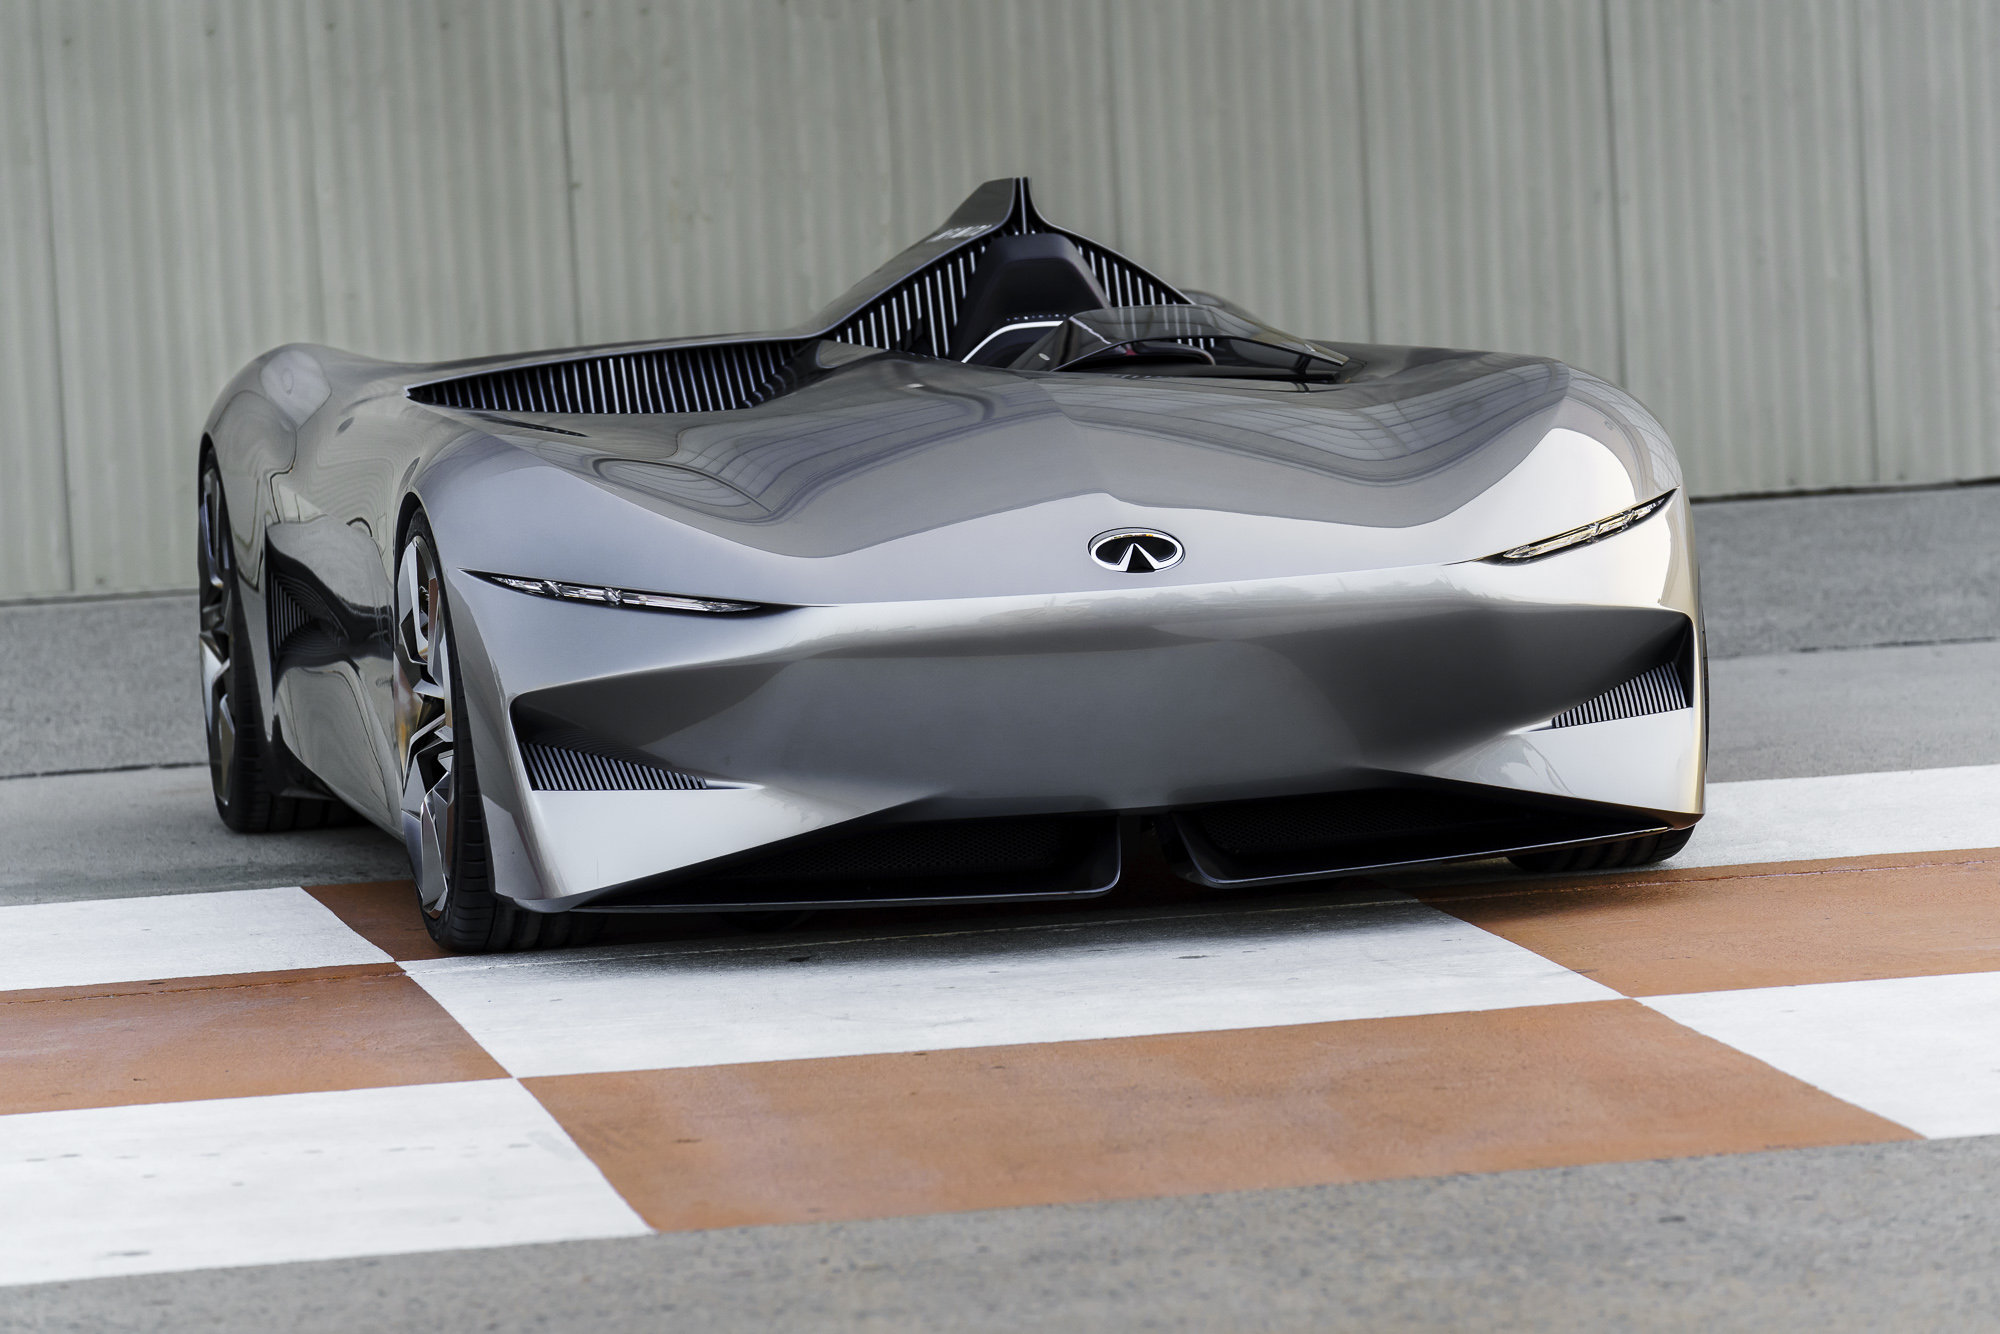 Infiniti Prototype 10 Gives Glimpse of Future Electric Sports Car